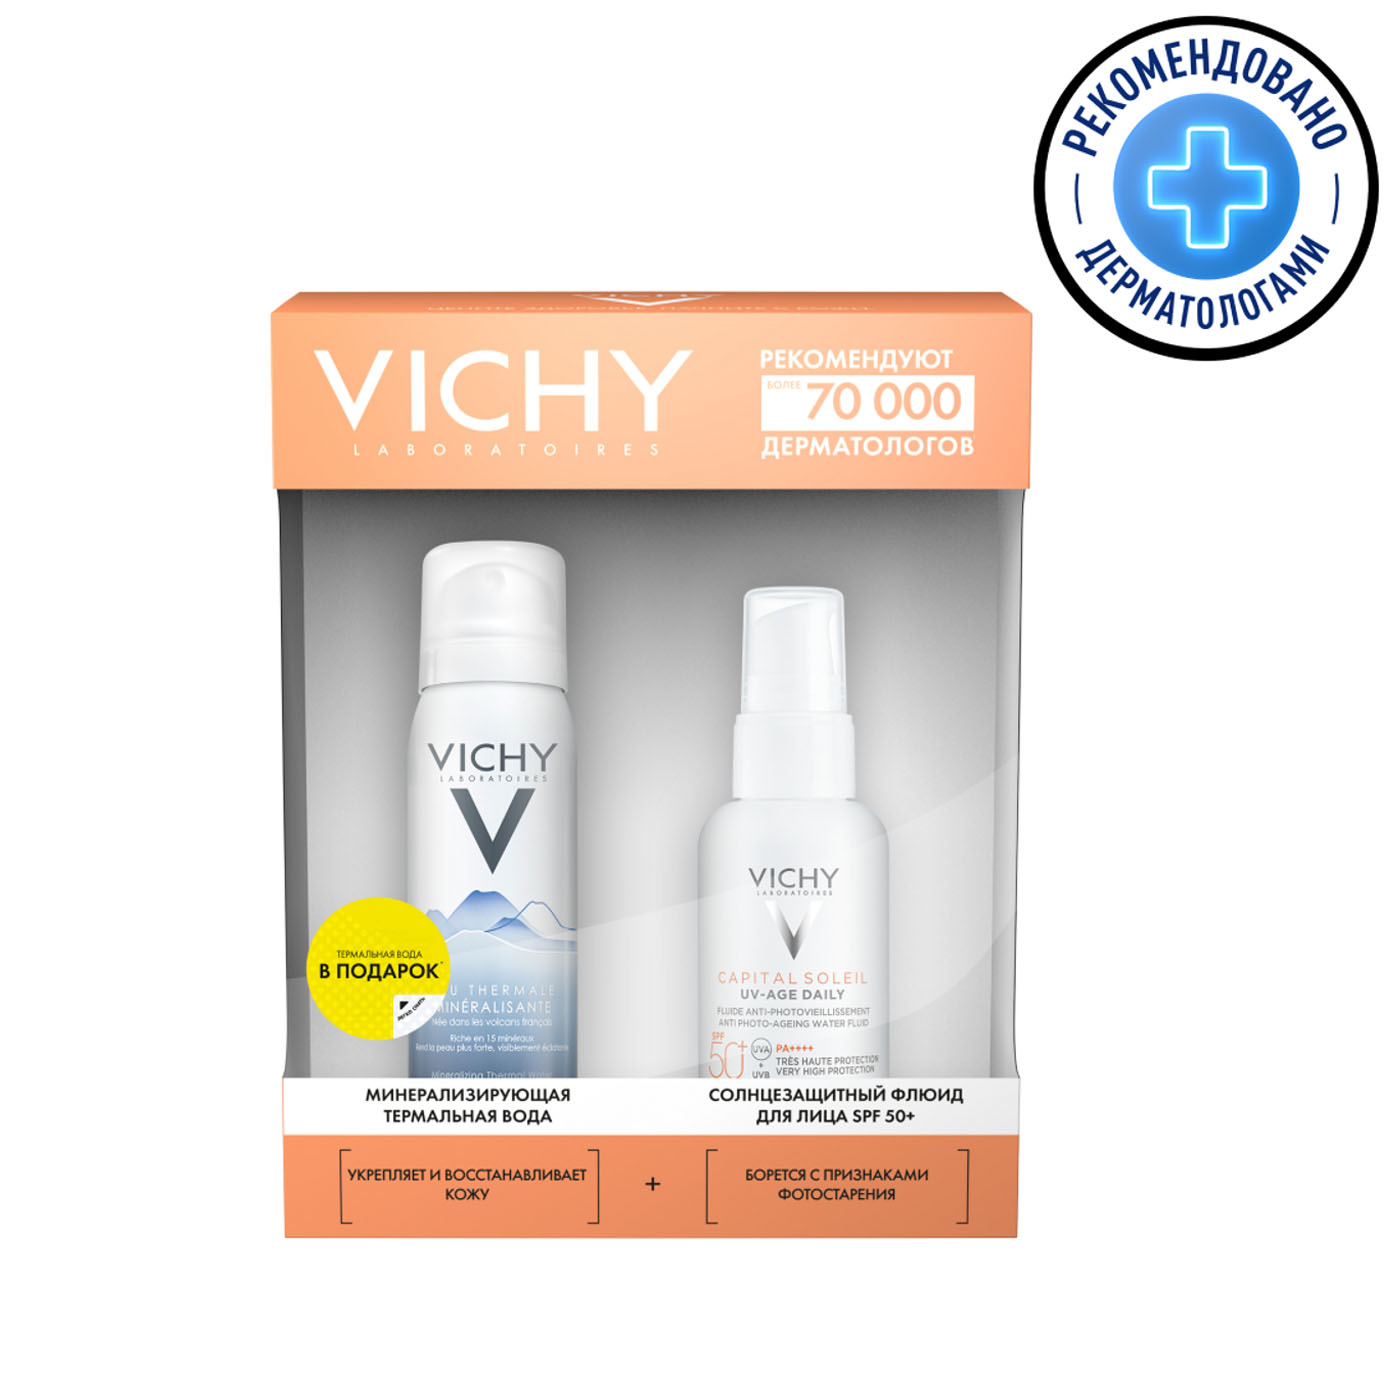 Vichy Подарочный набор: солнцезащитный флюид SPF50+ 40 мл + термальная вода 50 мл (Vichy, Capital Soleil)